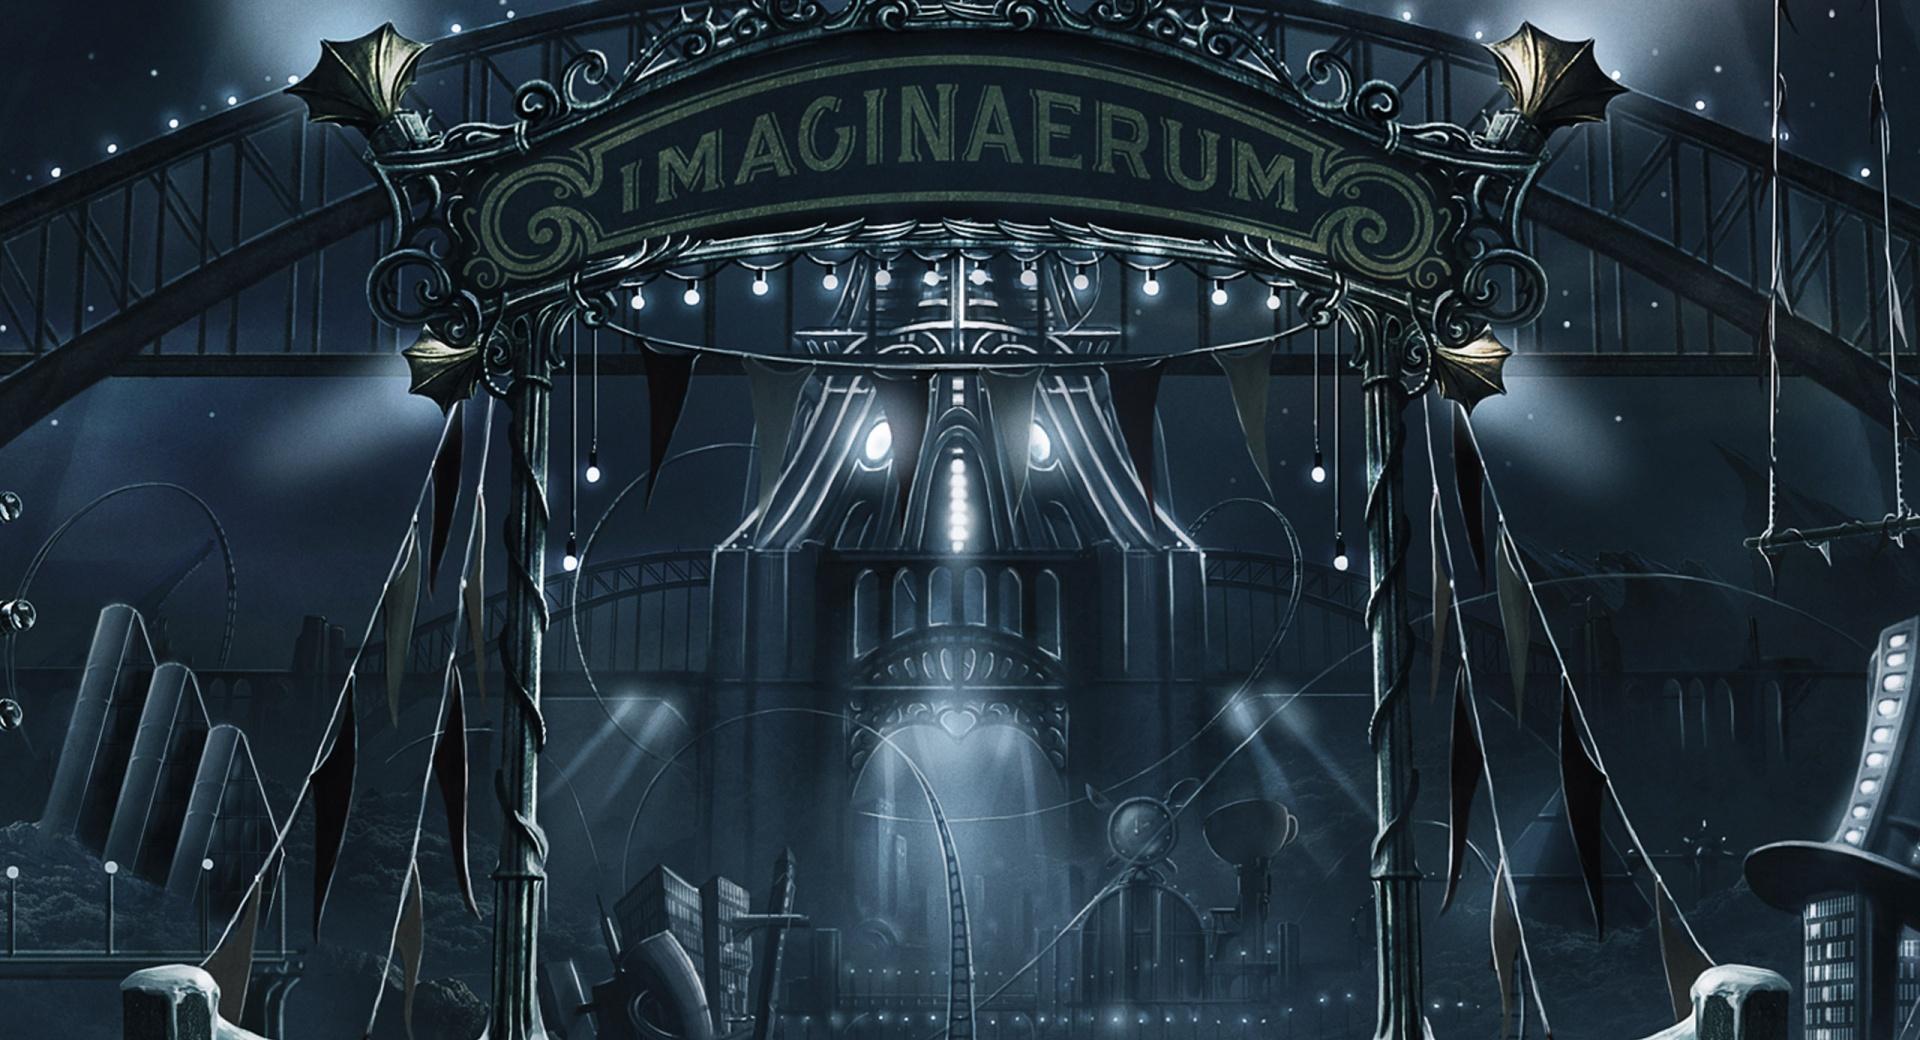 Imaginaerum - Nightwish at 1024 x 1024 iPad size wallpapers HD quality